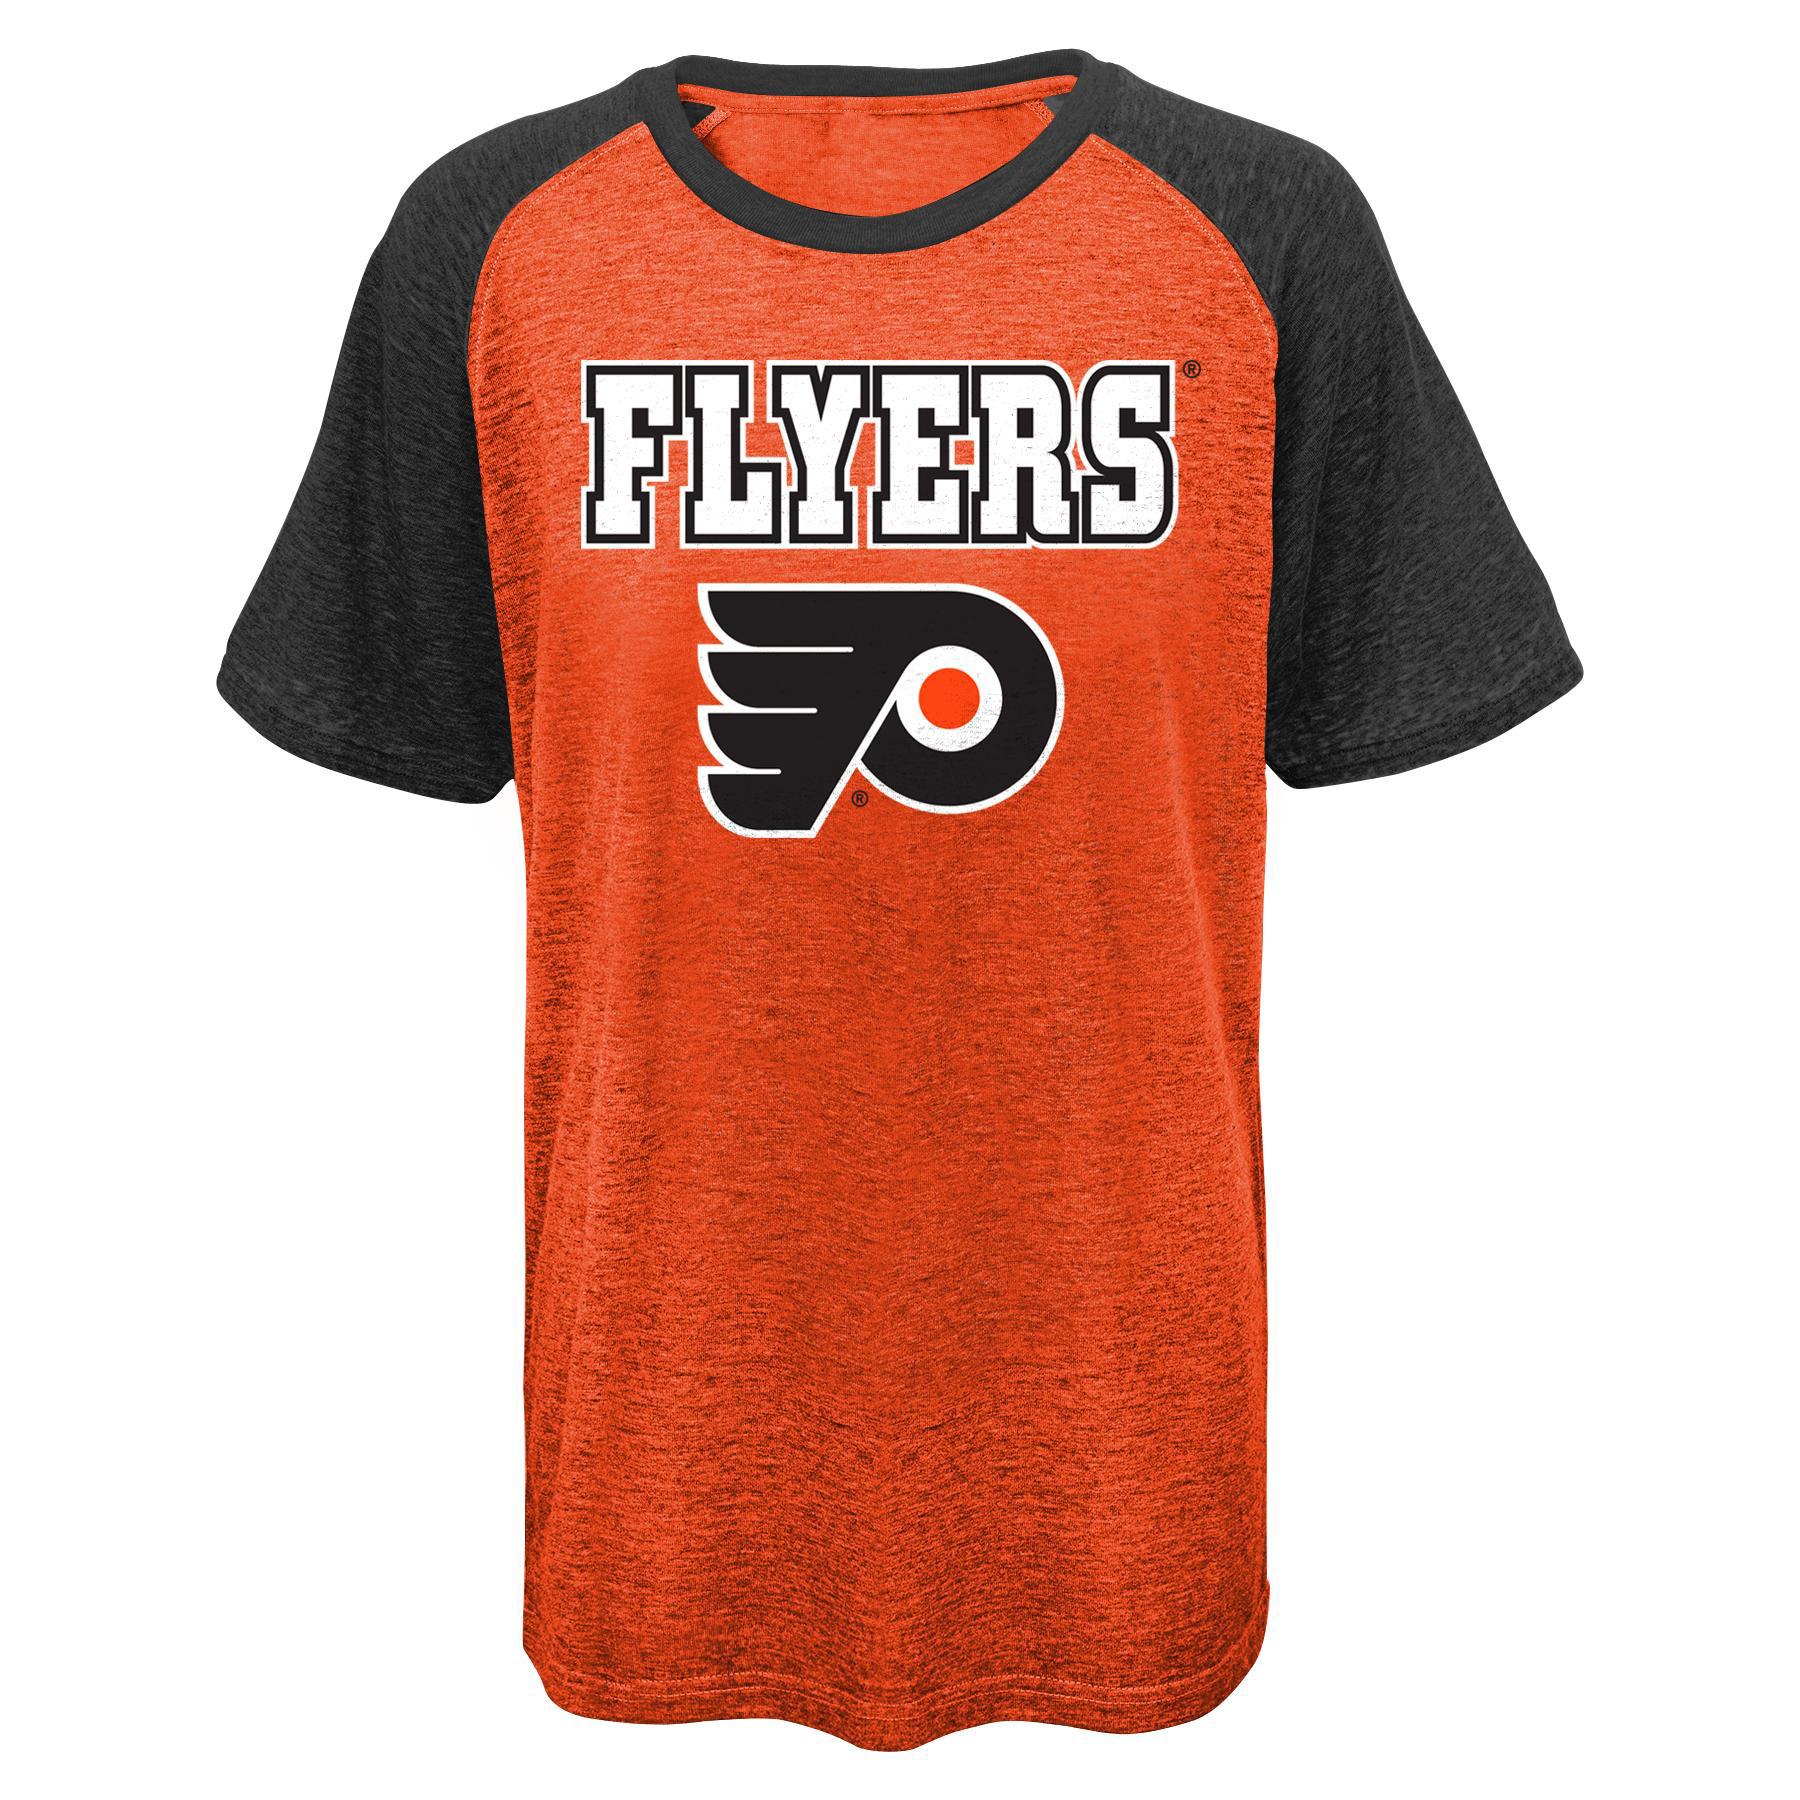 NHL Boys' Raglan T-shirt - Philadelphia Flyers